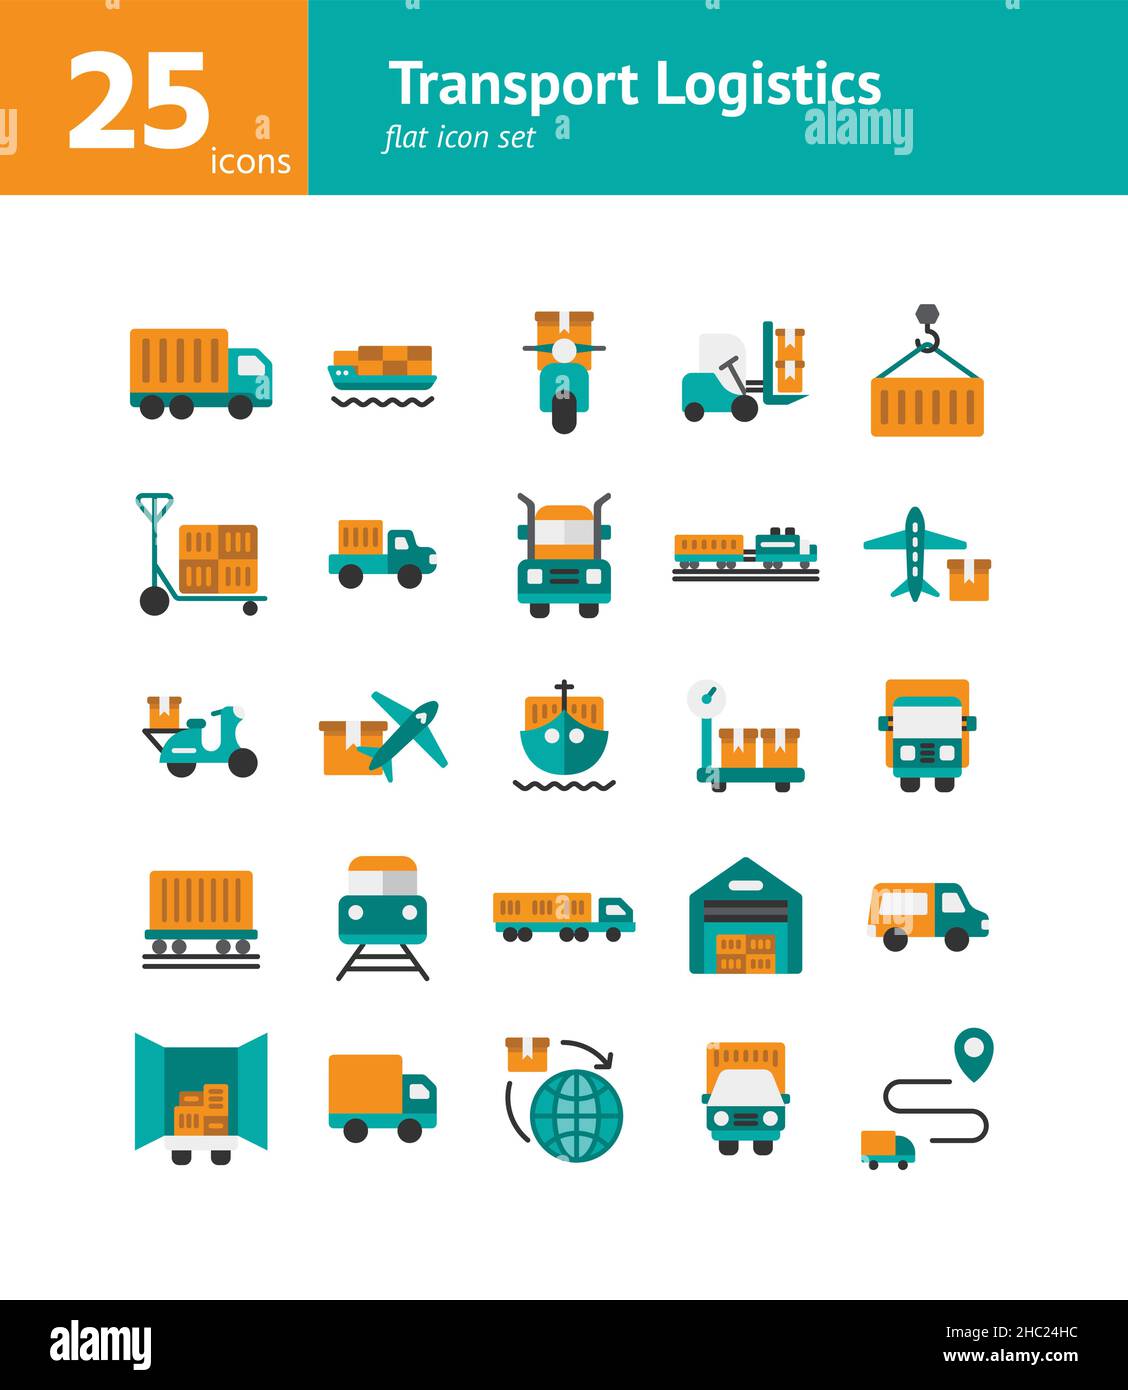 Transport Logistics flat icon set. Vector and Illustration. Stock Vector